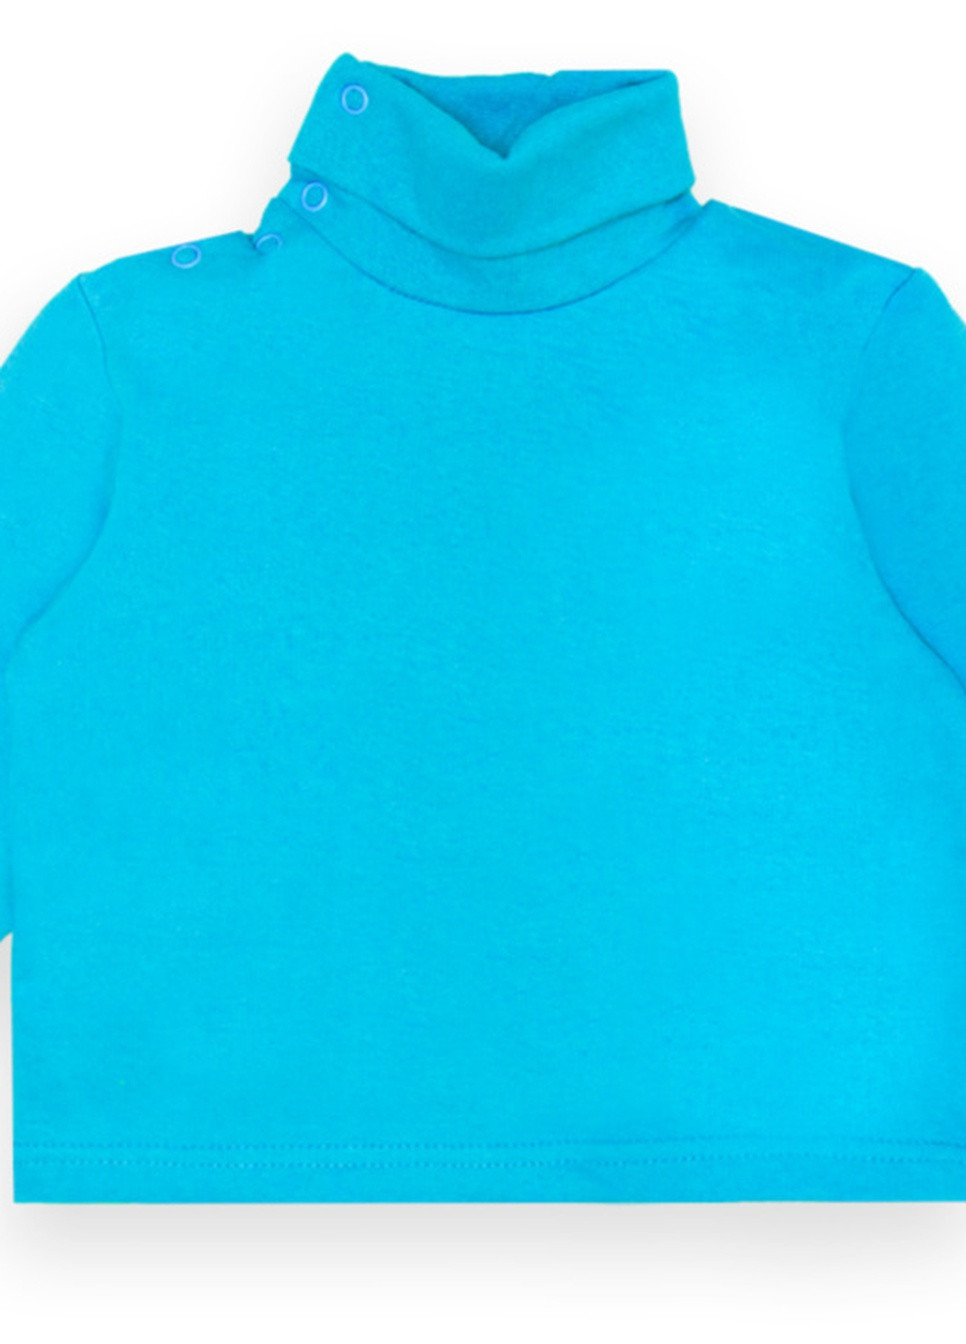 Бирюзовый зимний детский свитер для девочки sv-22-3-3 *mini* Габби